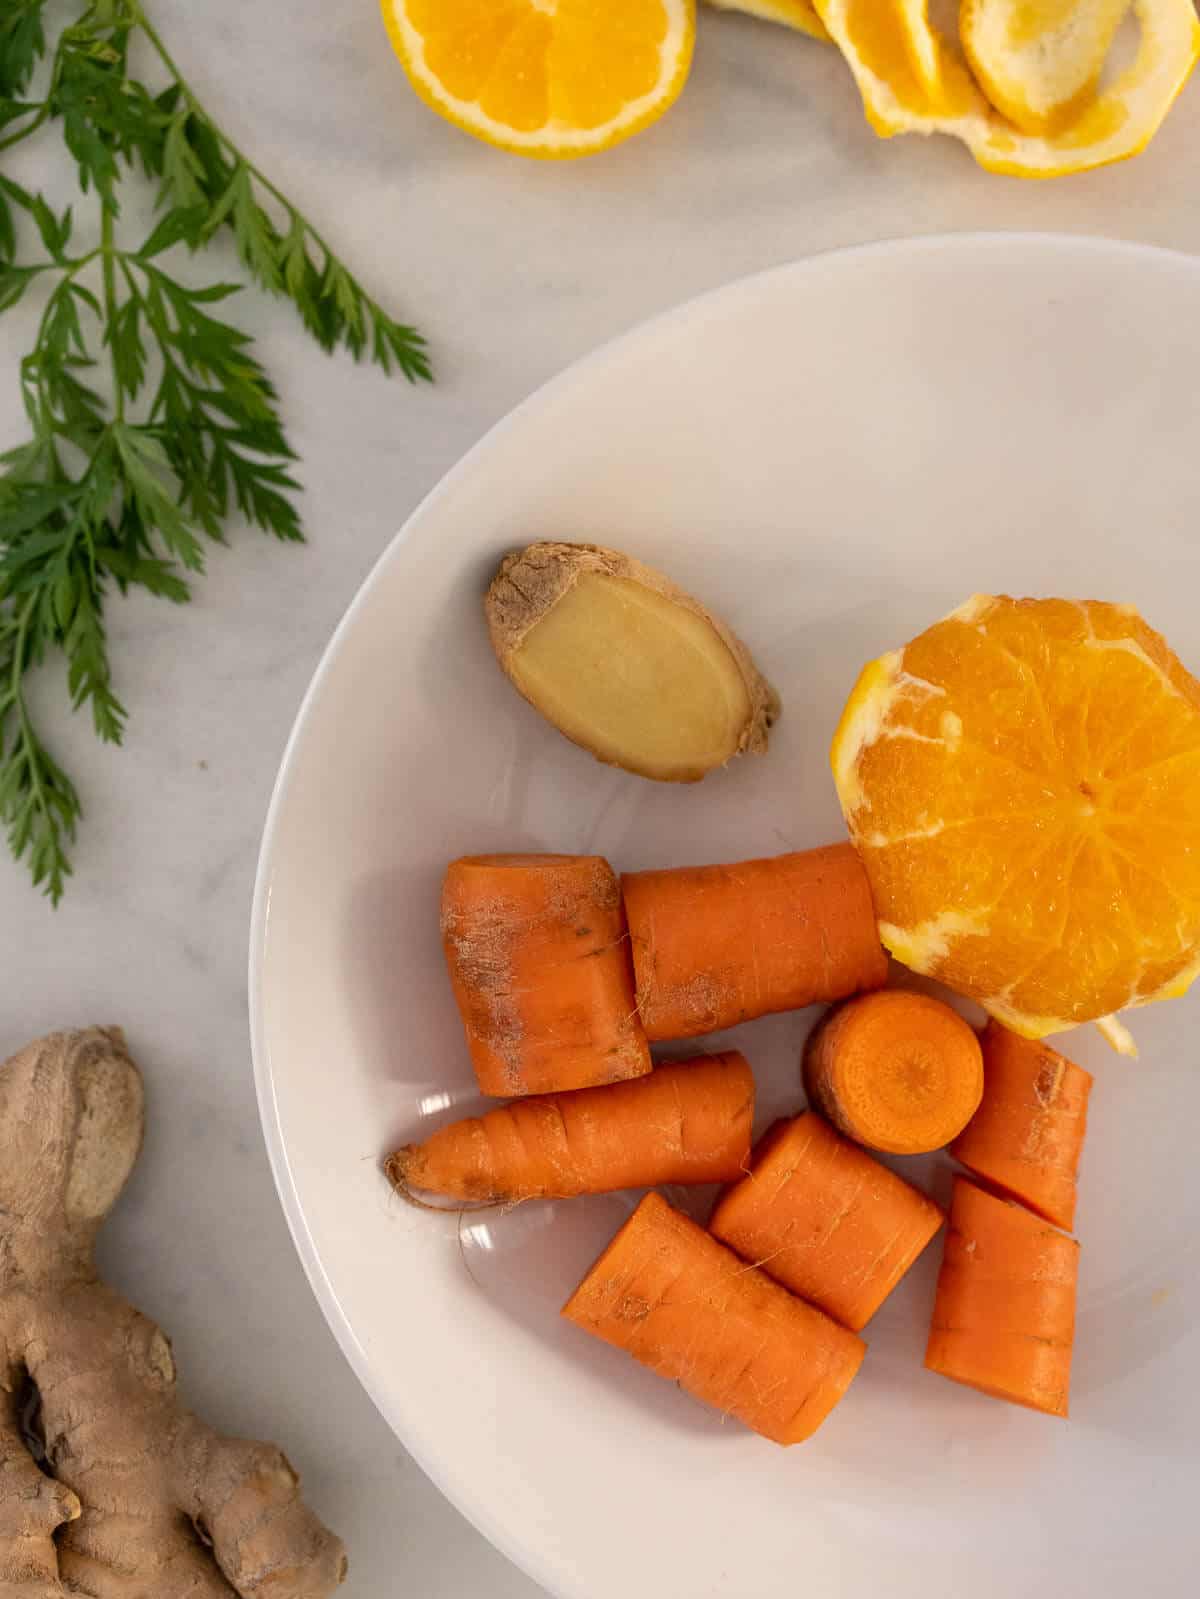 ingredientes para hacer zumo de zanahoria, naranja y jengibre.